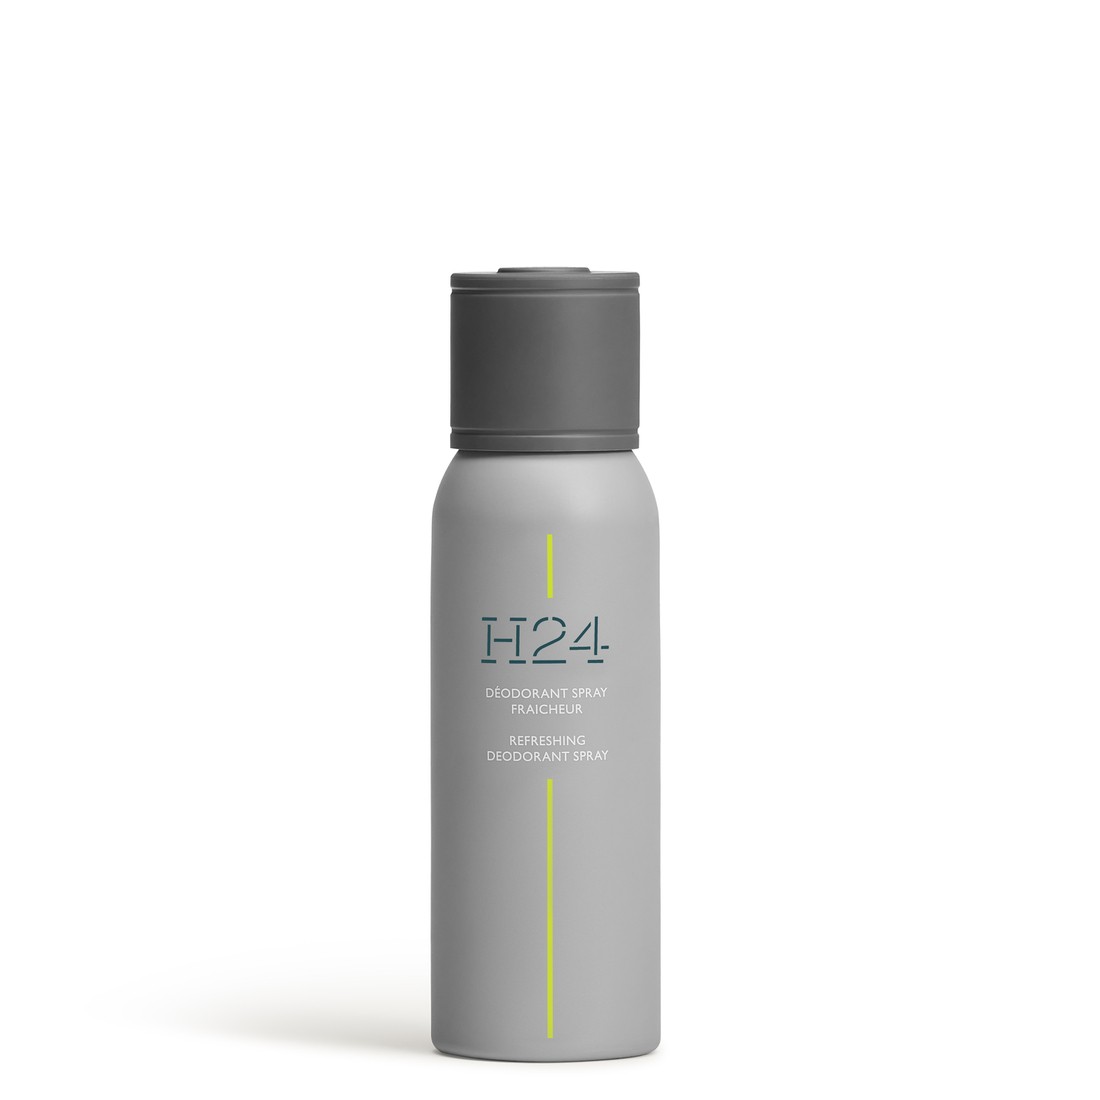 Hermès H24 Refreshing Deodorant Spray